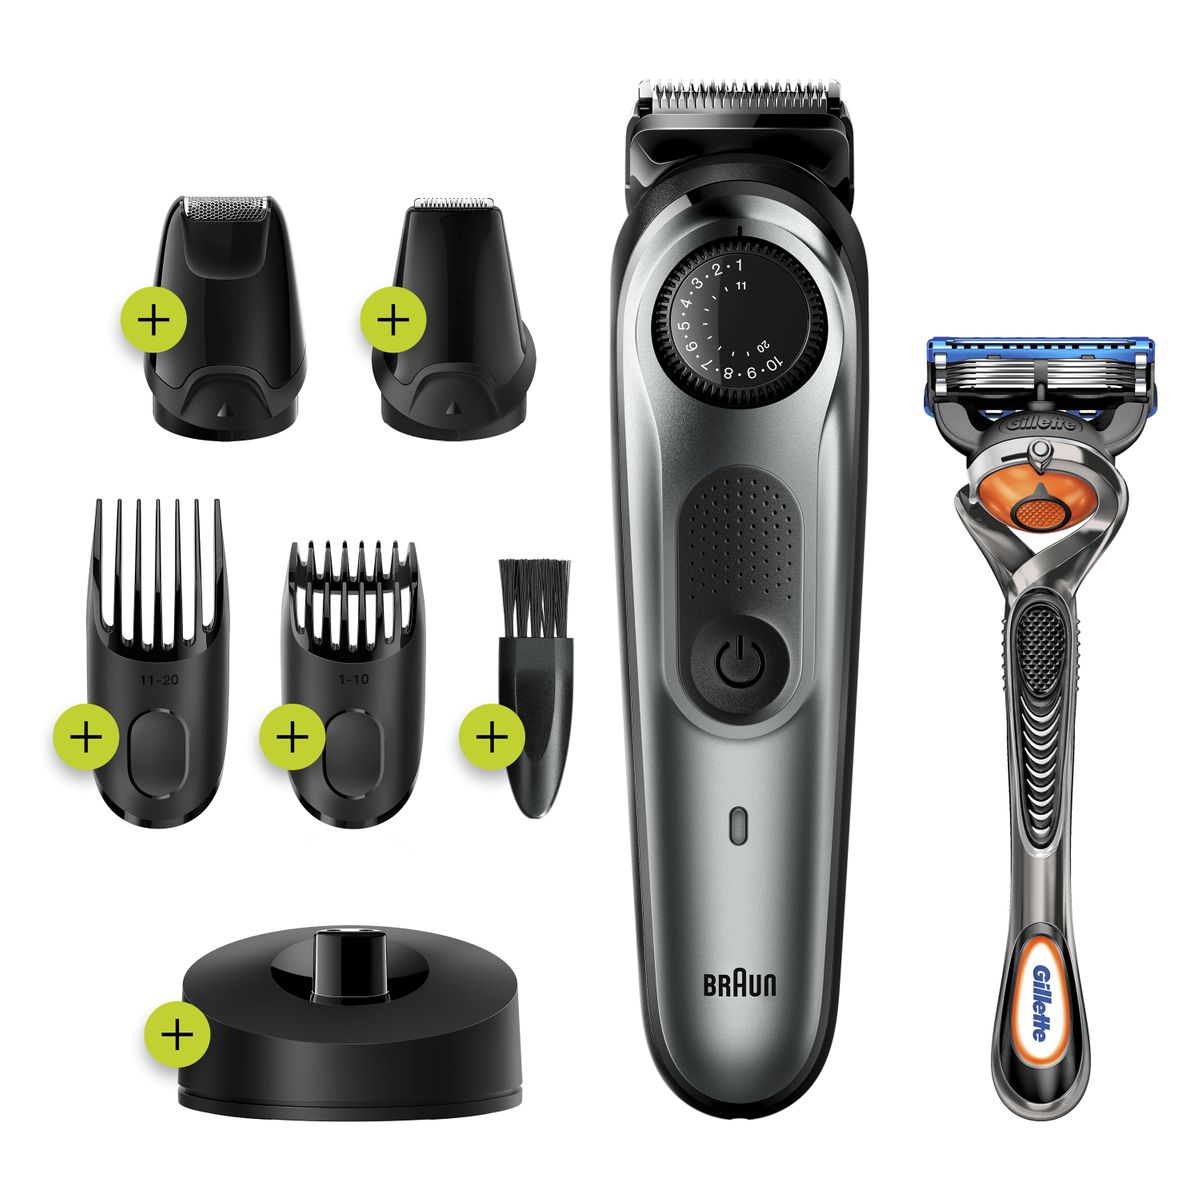 Braun beard trimmer/hair clipper men, trimmer/hair clipper, incl. 4 attachments & shaver, 39 length settings, BT7240, black/metallic black/grey Single